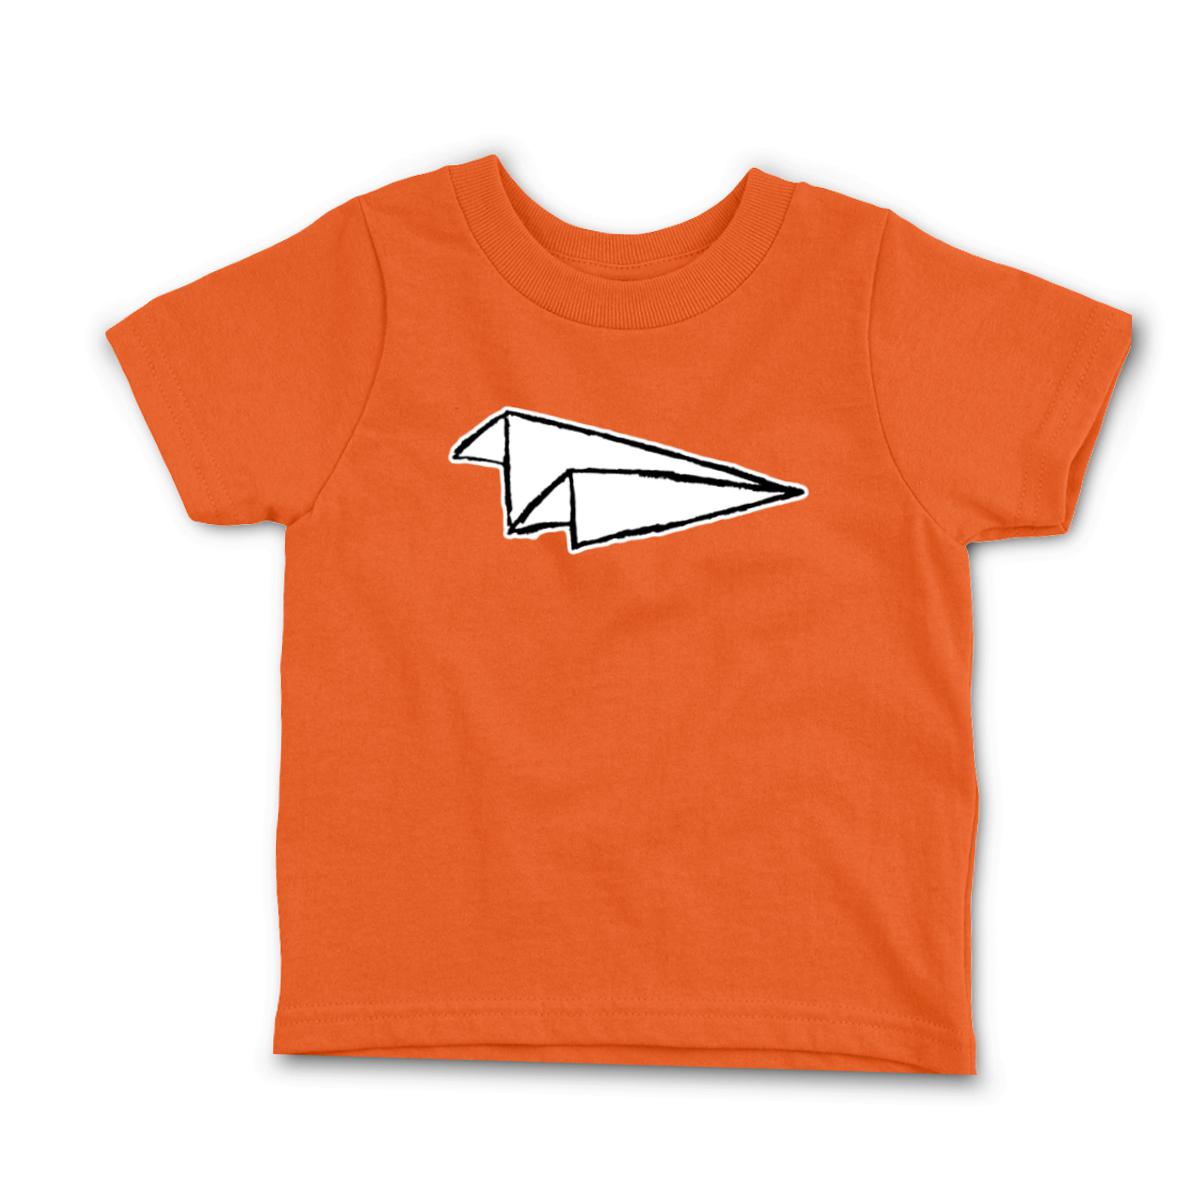 Airplane Sketch Infant Tee 24M orange